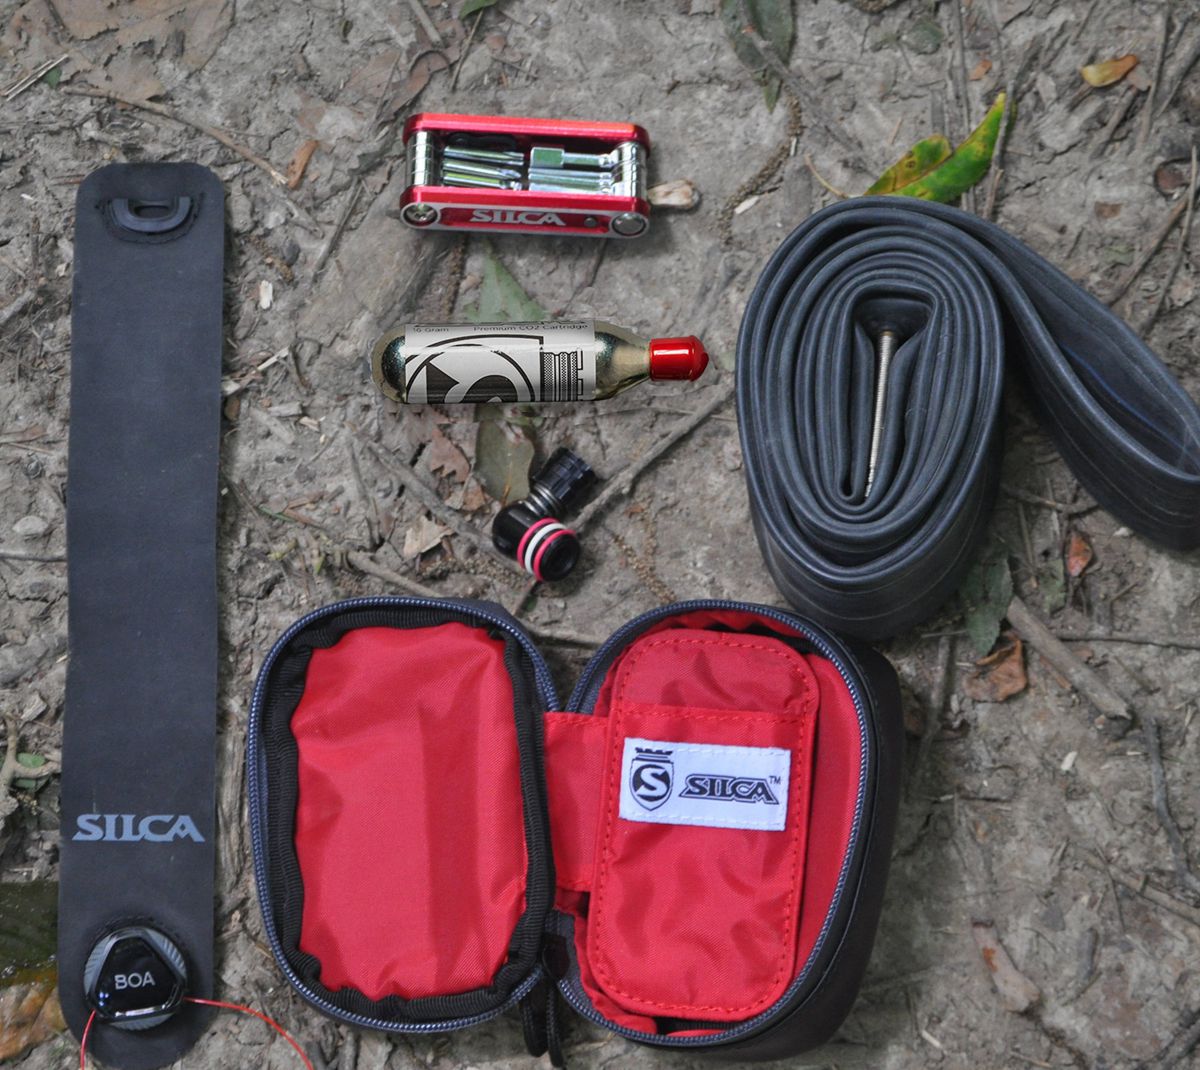 Silca-Mattone-compact-saddle-bag-boa-dial-road-mountain-bike-1.jpg